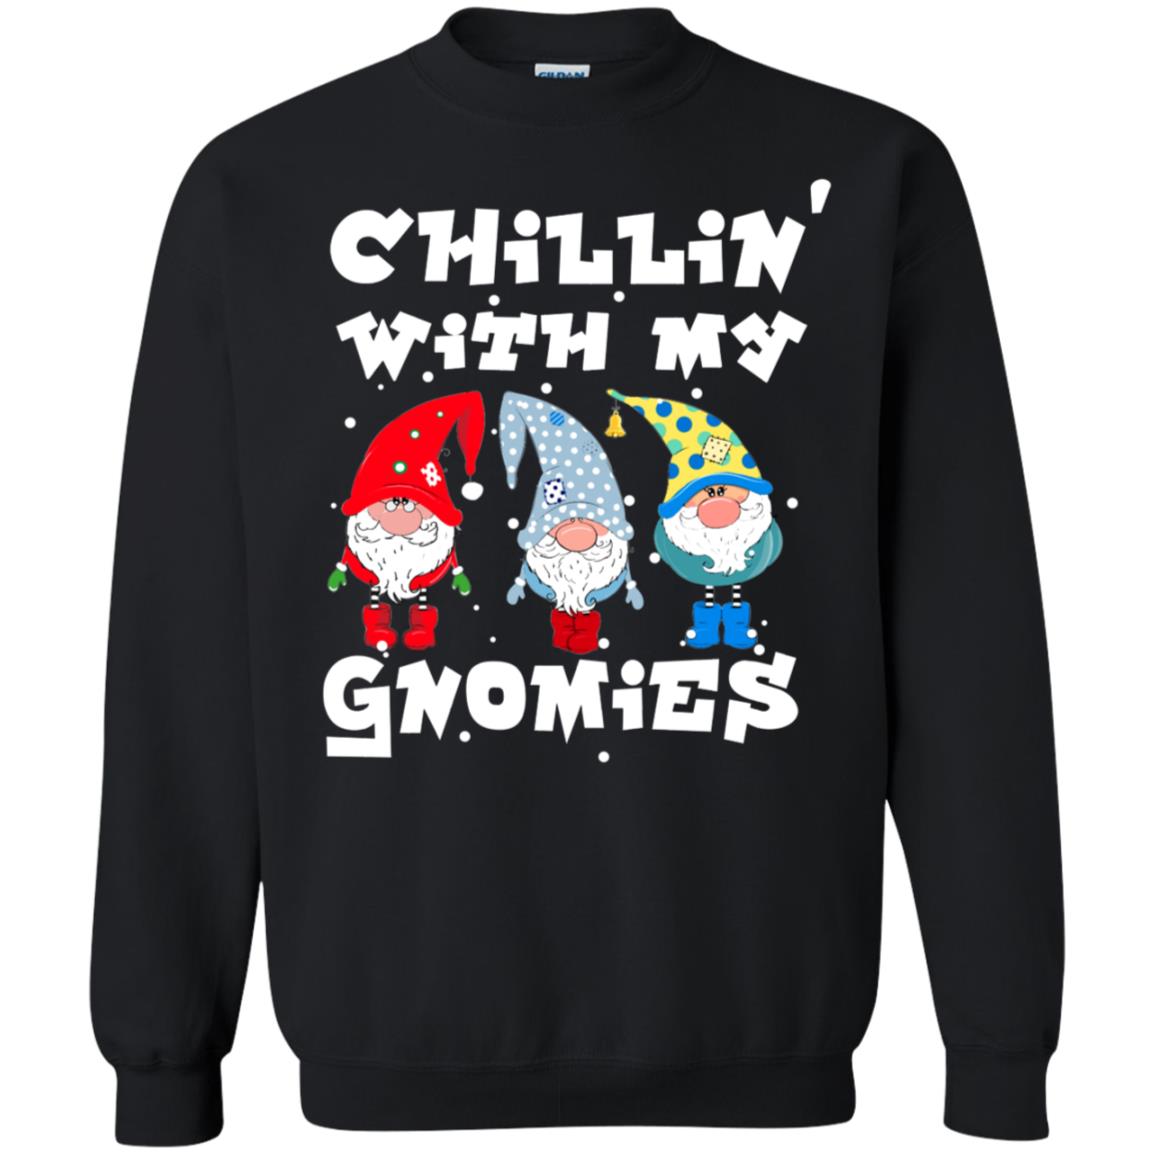 Chillin' With My Gnomies X-mas Gift Shirt For Mens Womens KidsG180 Gildan Crewneck Pullover Sweatshirt 8 oz.